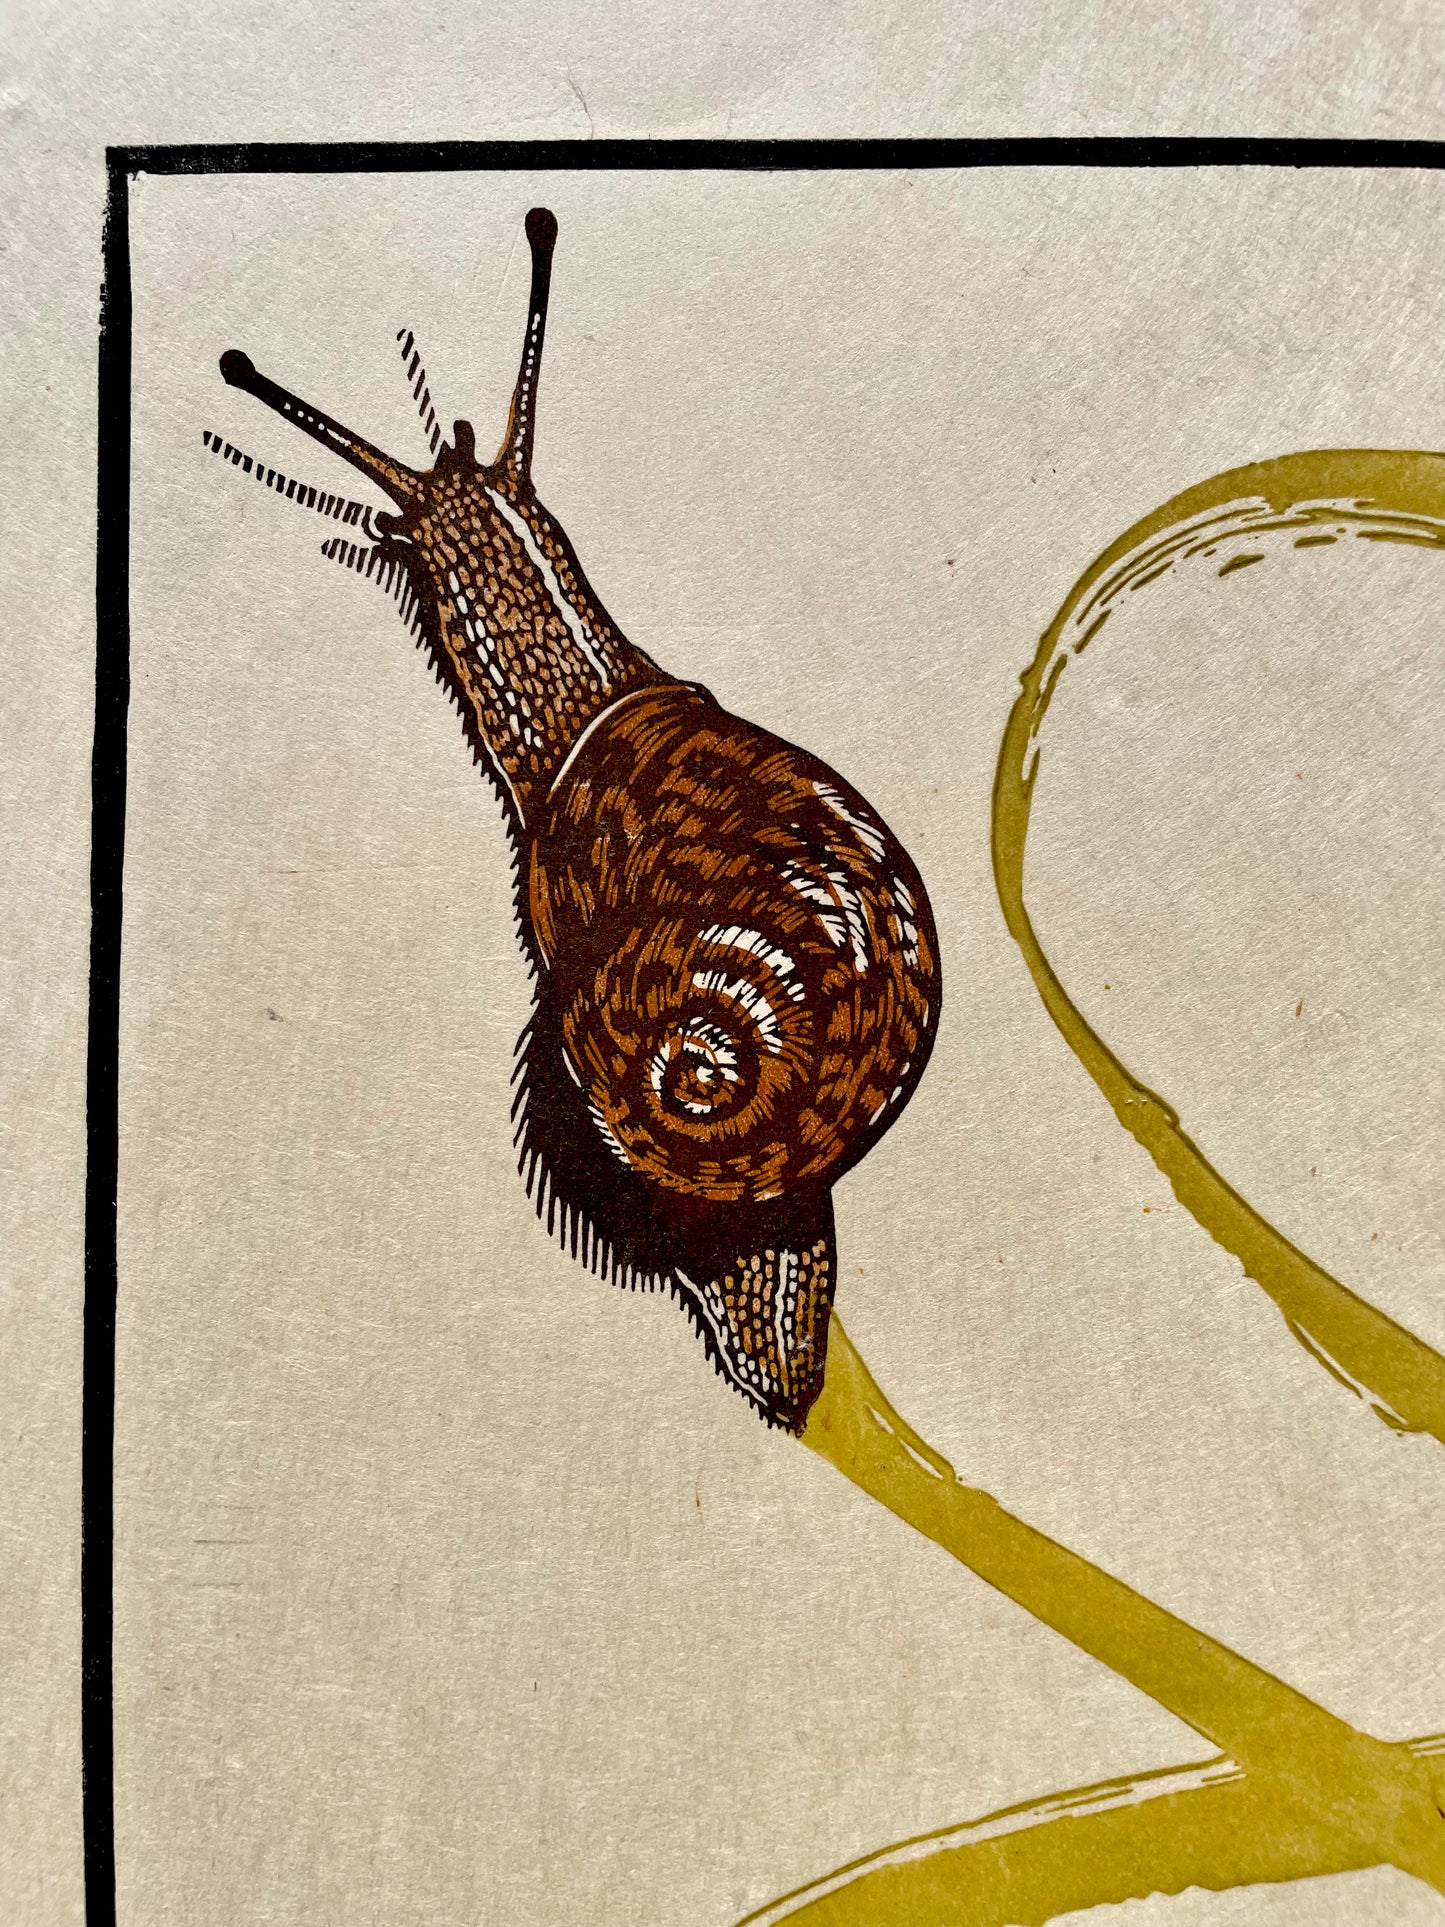 The Snail Linocut Print